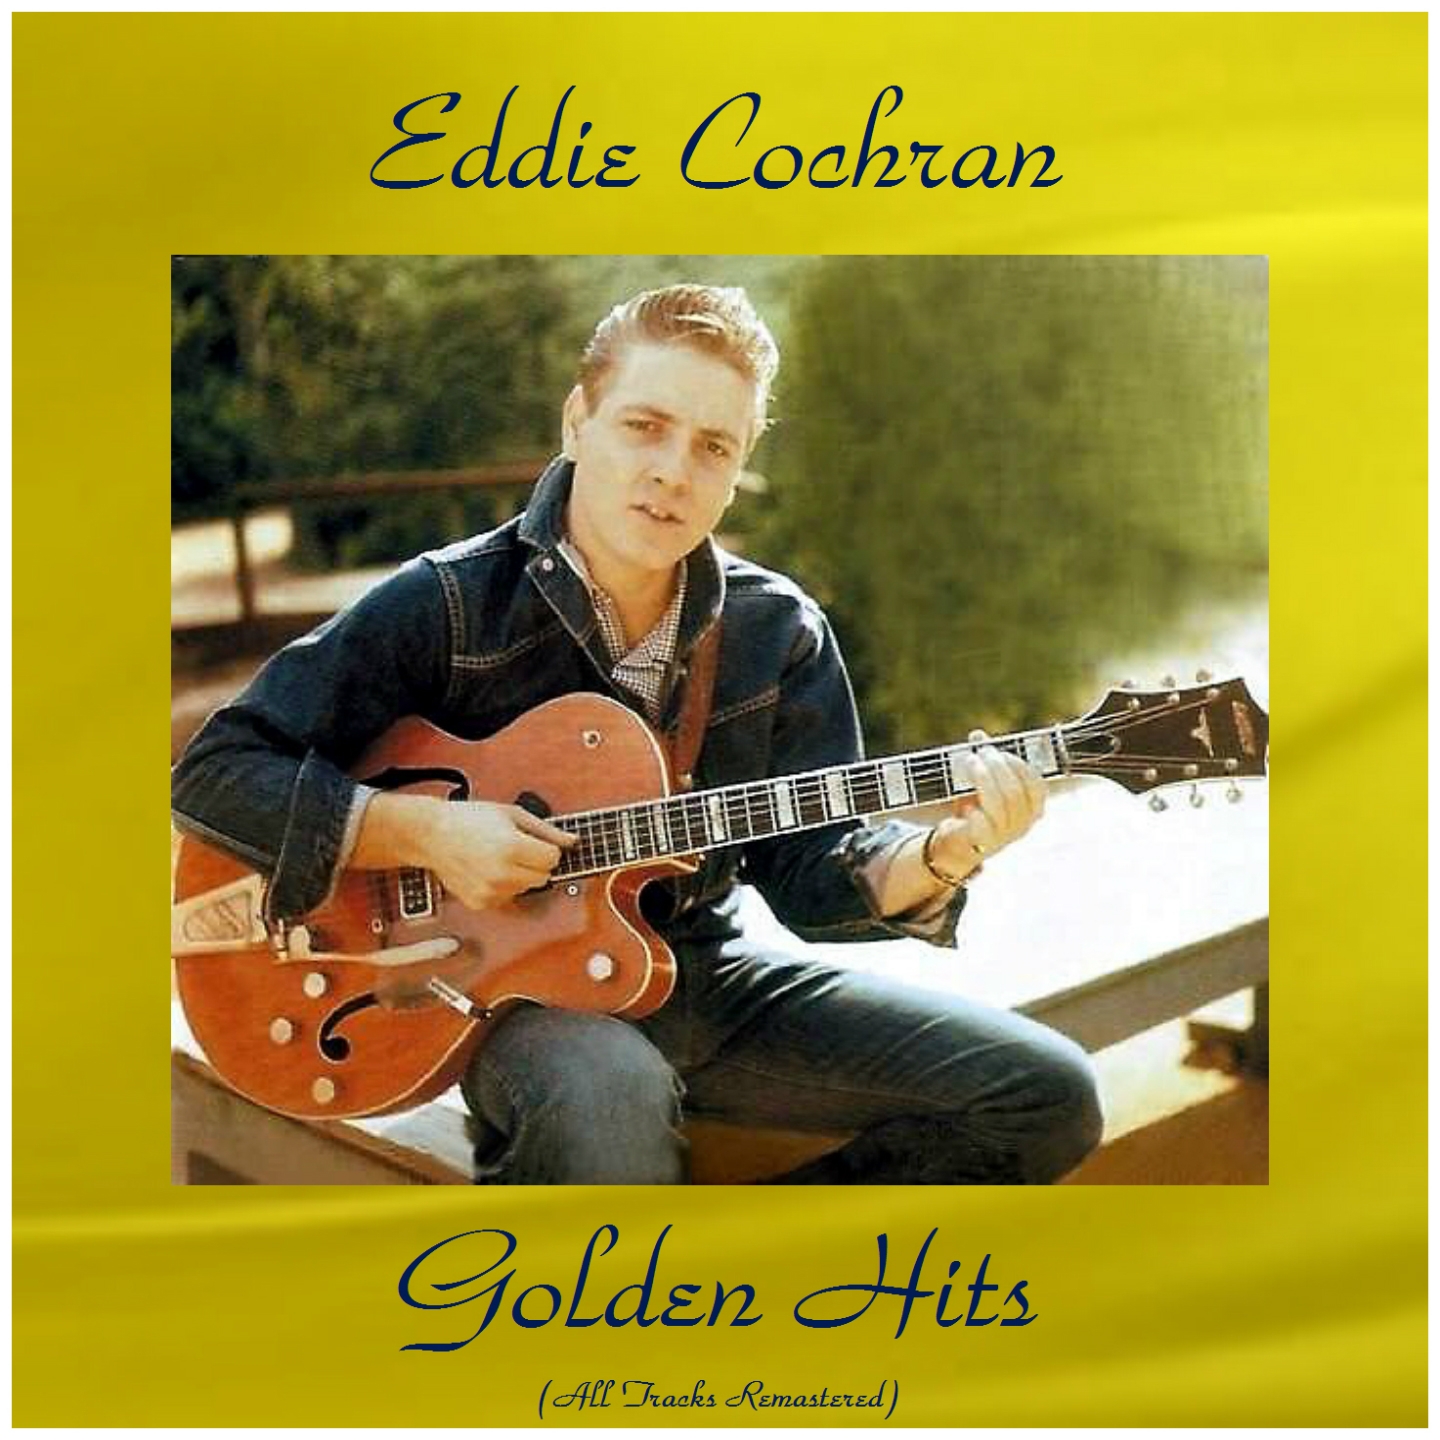 Eddie Cochran Golden Hits (All Tracks Remastered)